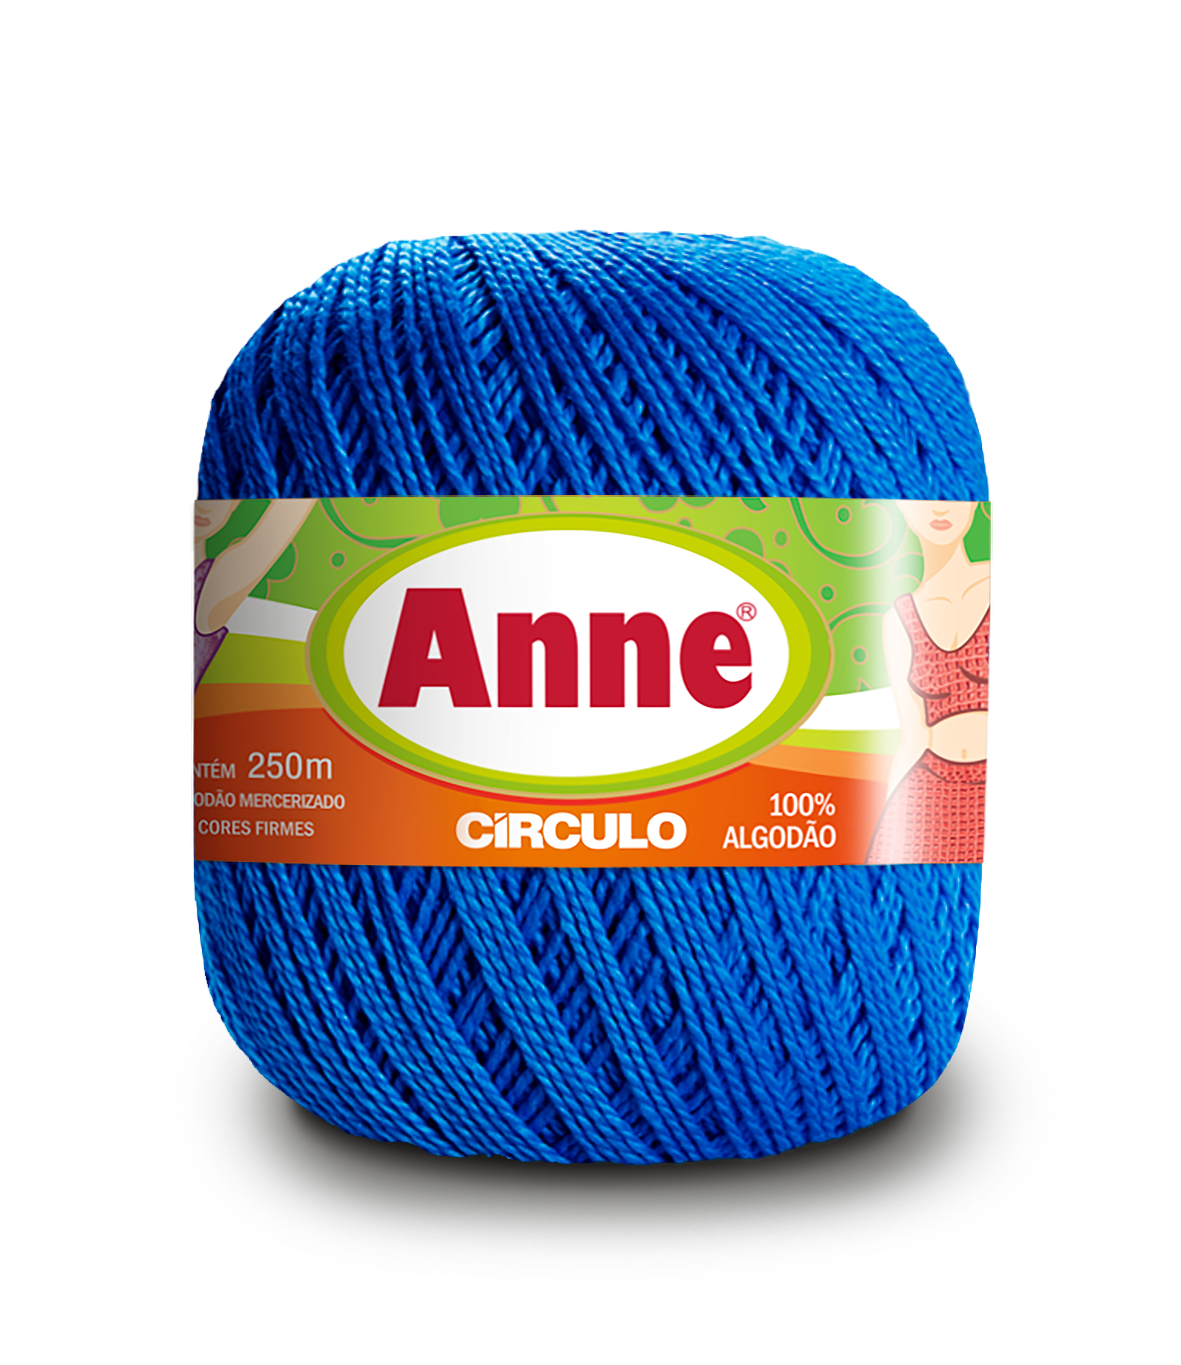 Circulo ANNE 250 m 73 gr, 100% Cotton Yarn (246808)